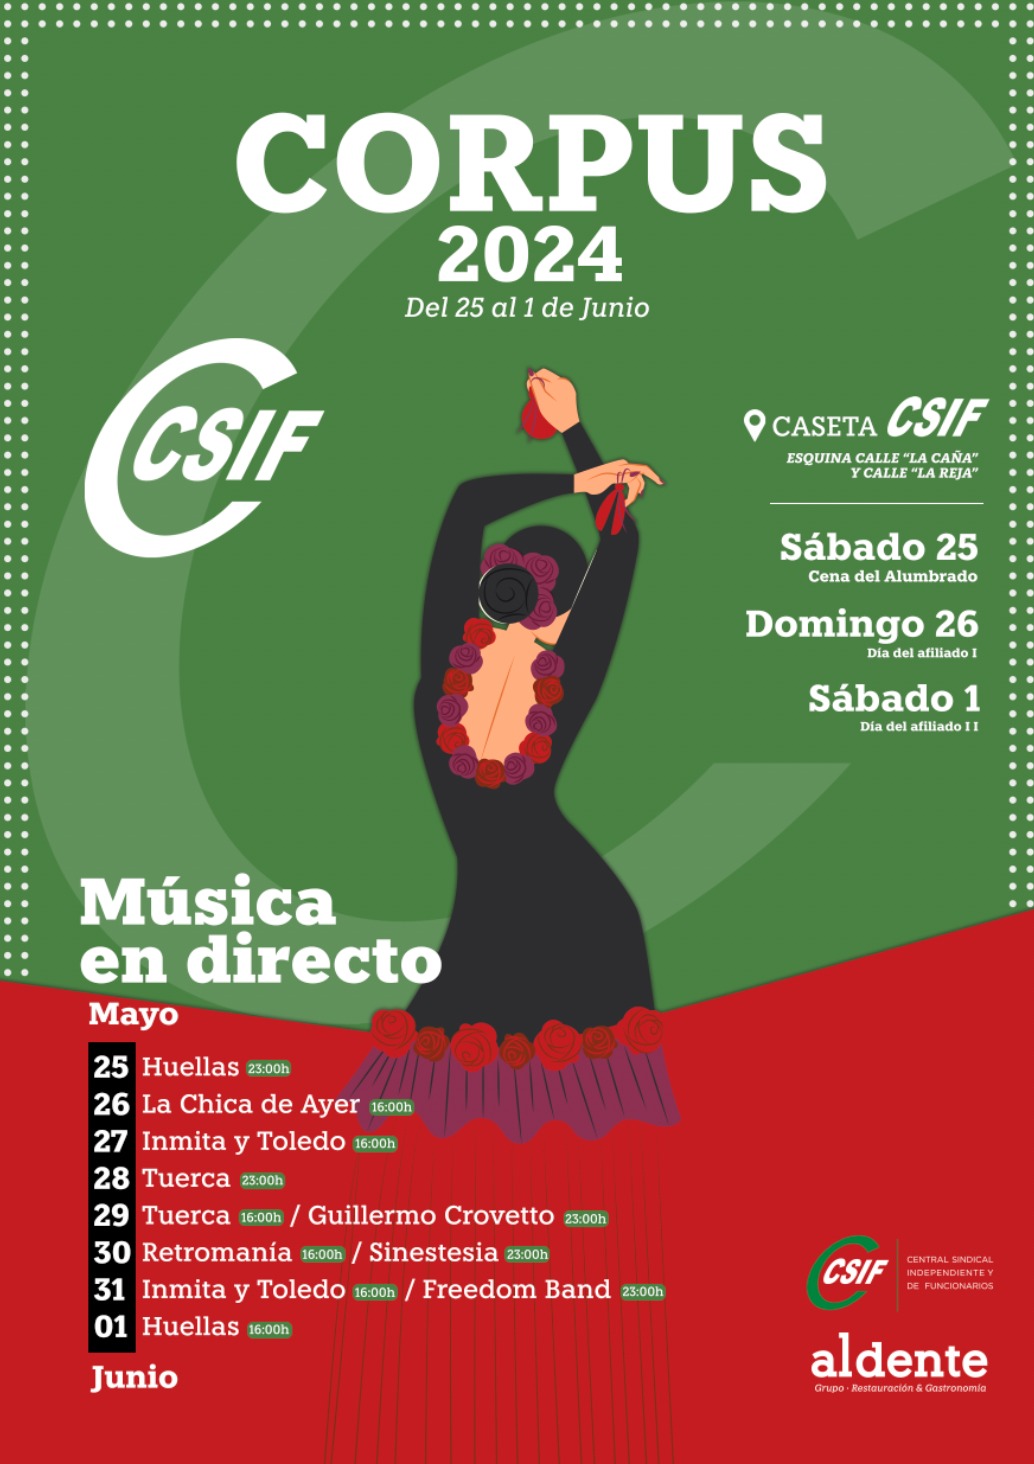 Disfruta del Corpus 2024 en la caseta del sindicato CSIF Granada